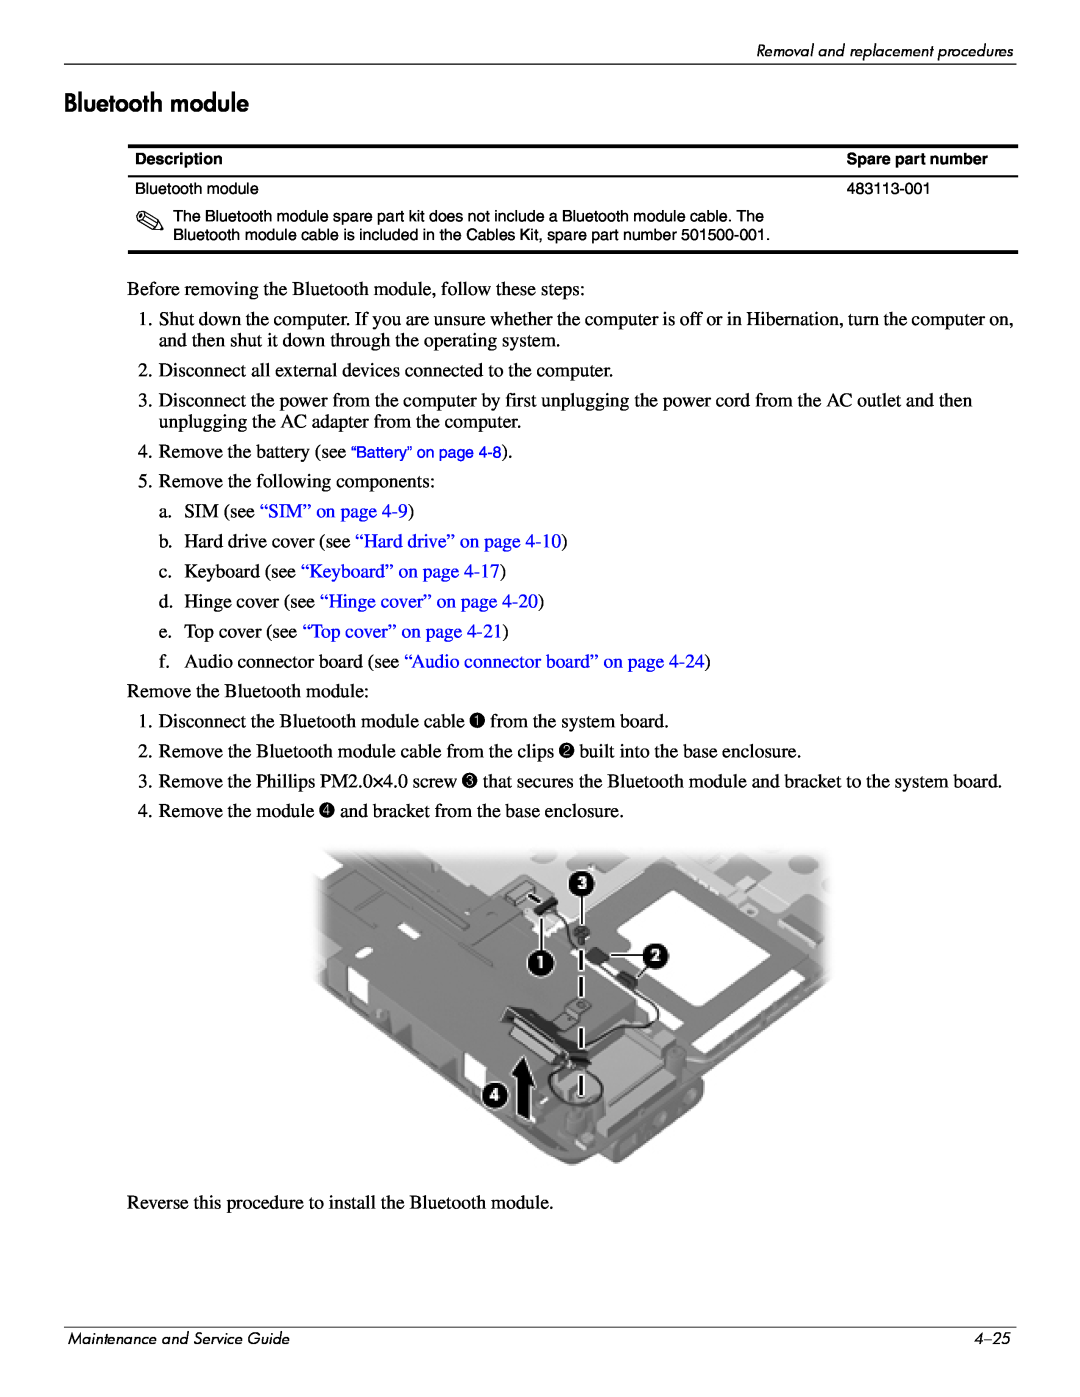 Hitachi 2730P manual Bluetooth module, a.SIM see “SIM” on page, b.Hard drive cover see “Hard drive” on page 